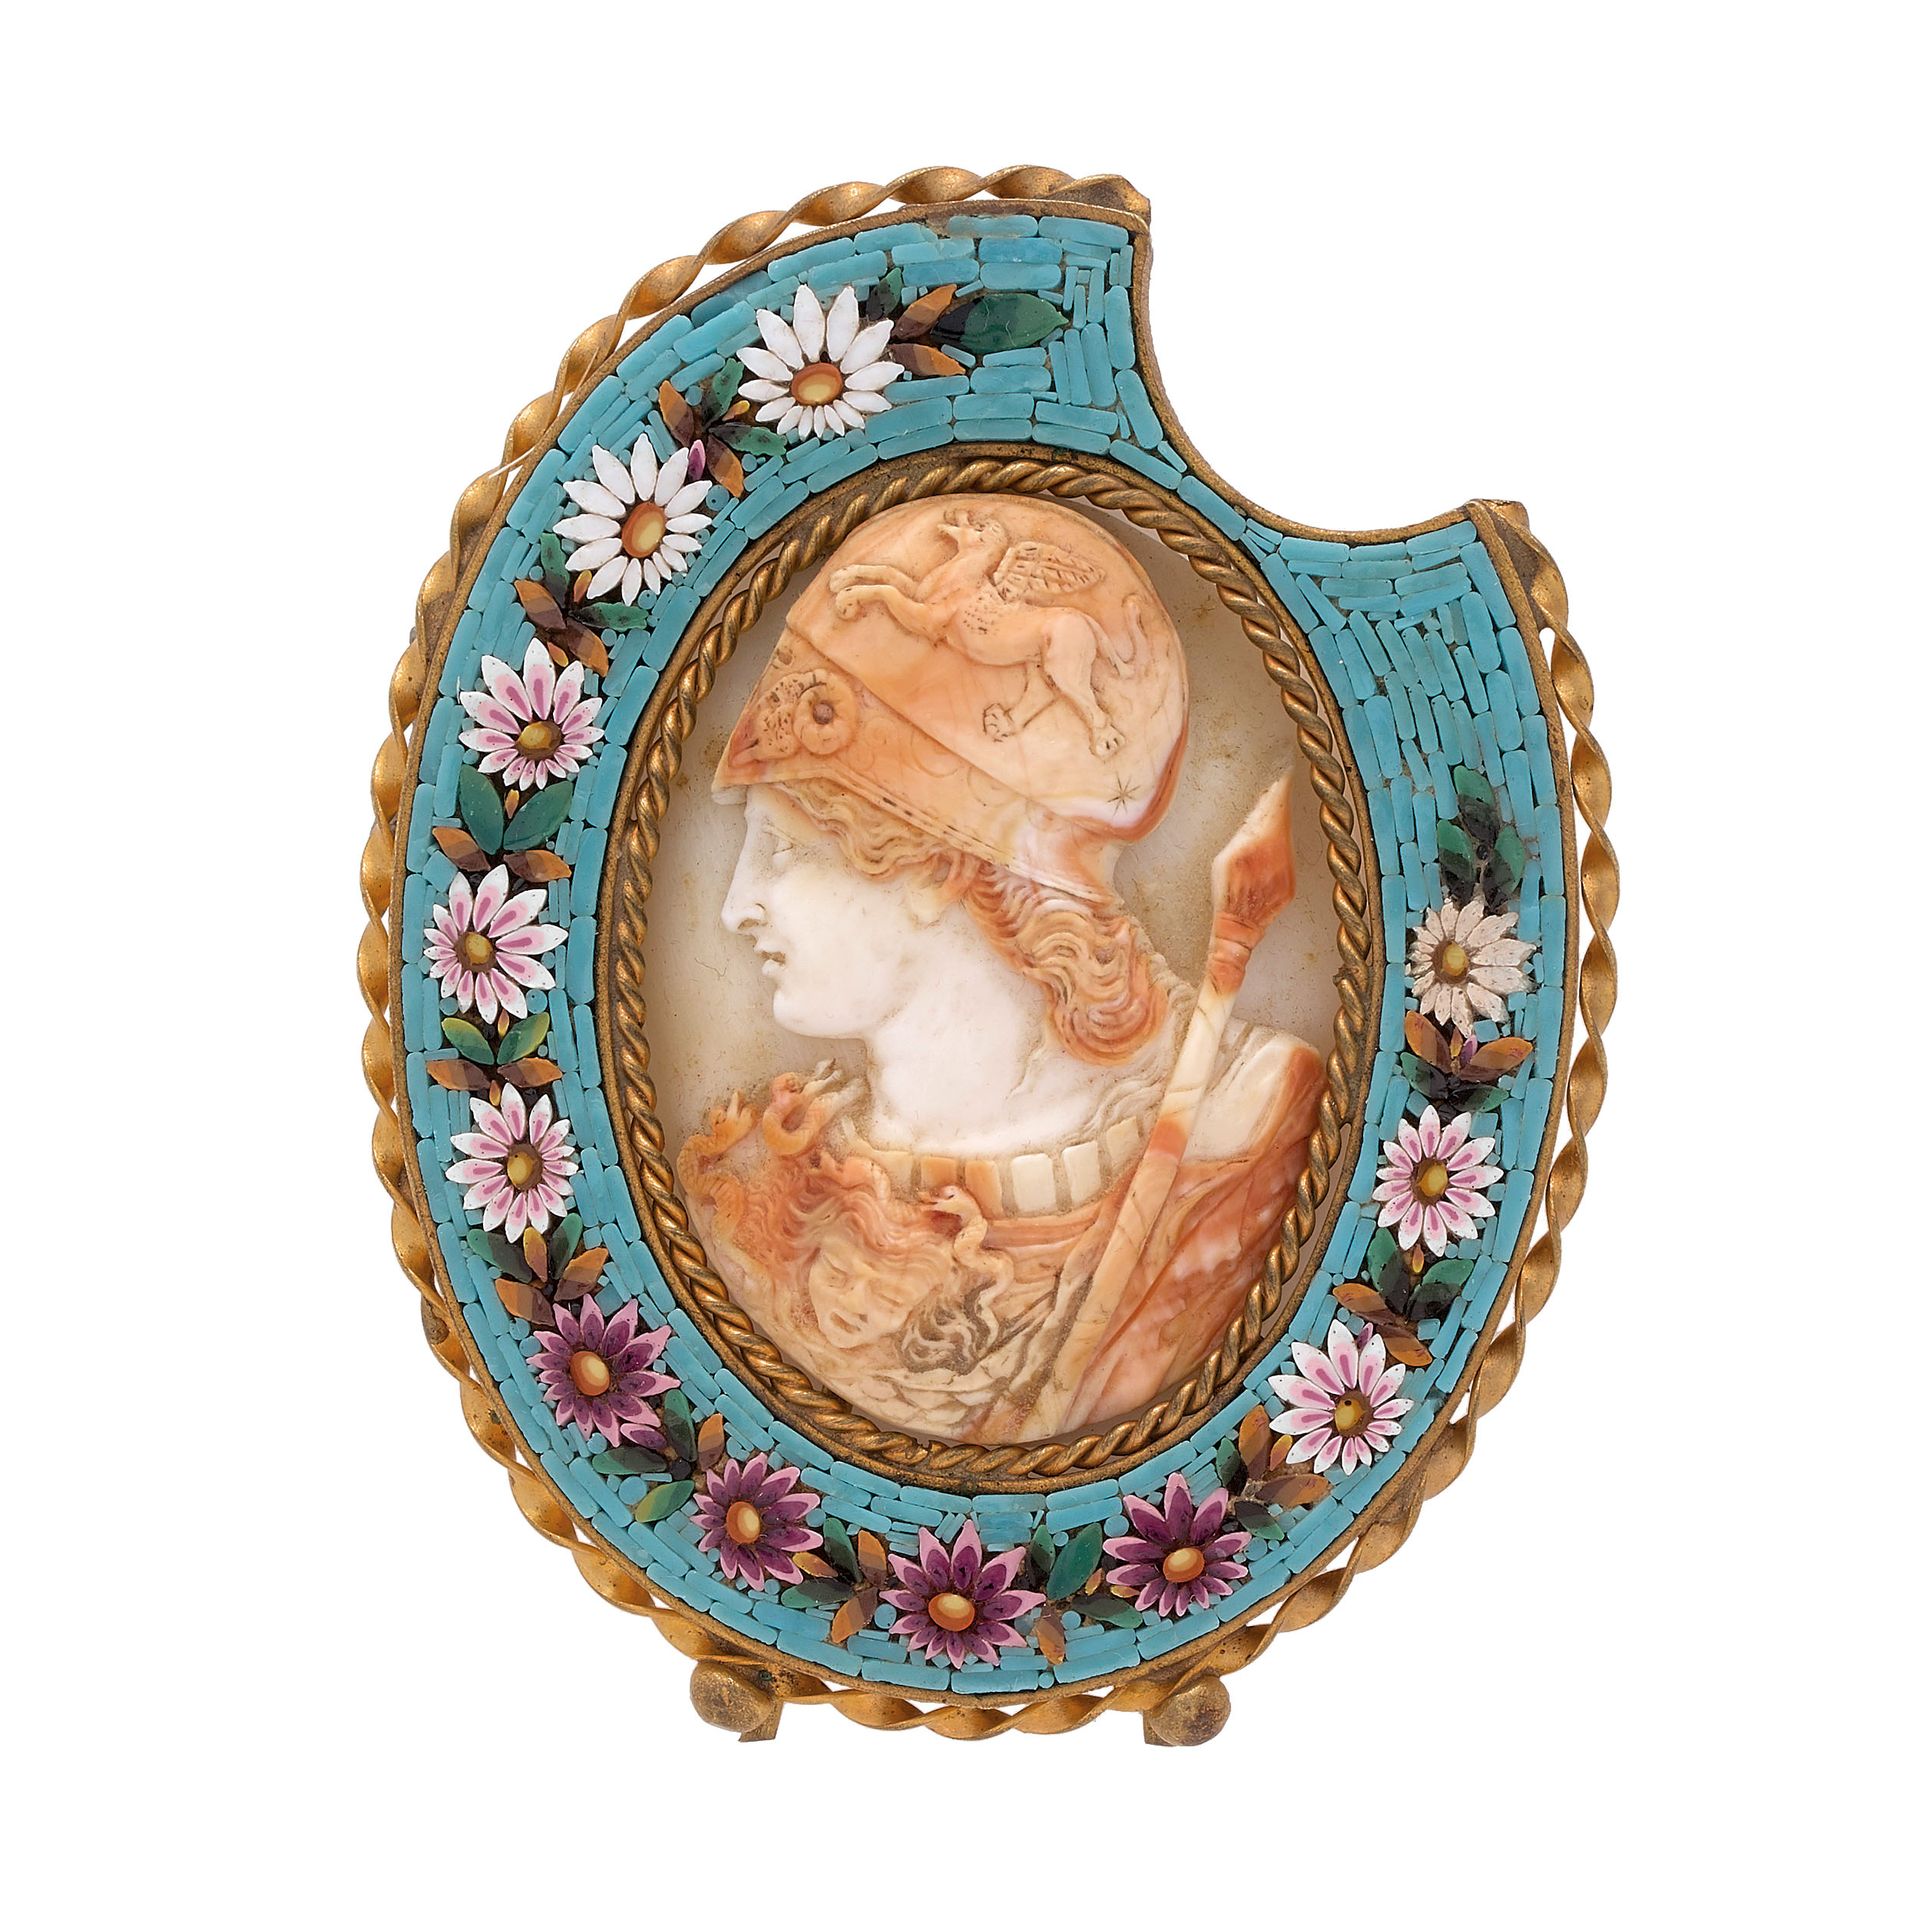 Null 壳体上的CAMEE

代表米纳瓦的轮廓和美杜莎的头。

在一个镀金的金属框架内，装饰着微马赛克的花朵和叶子。

19世纪时期。

一个十九世纪的浮雕图&hellip;